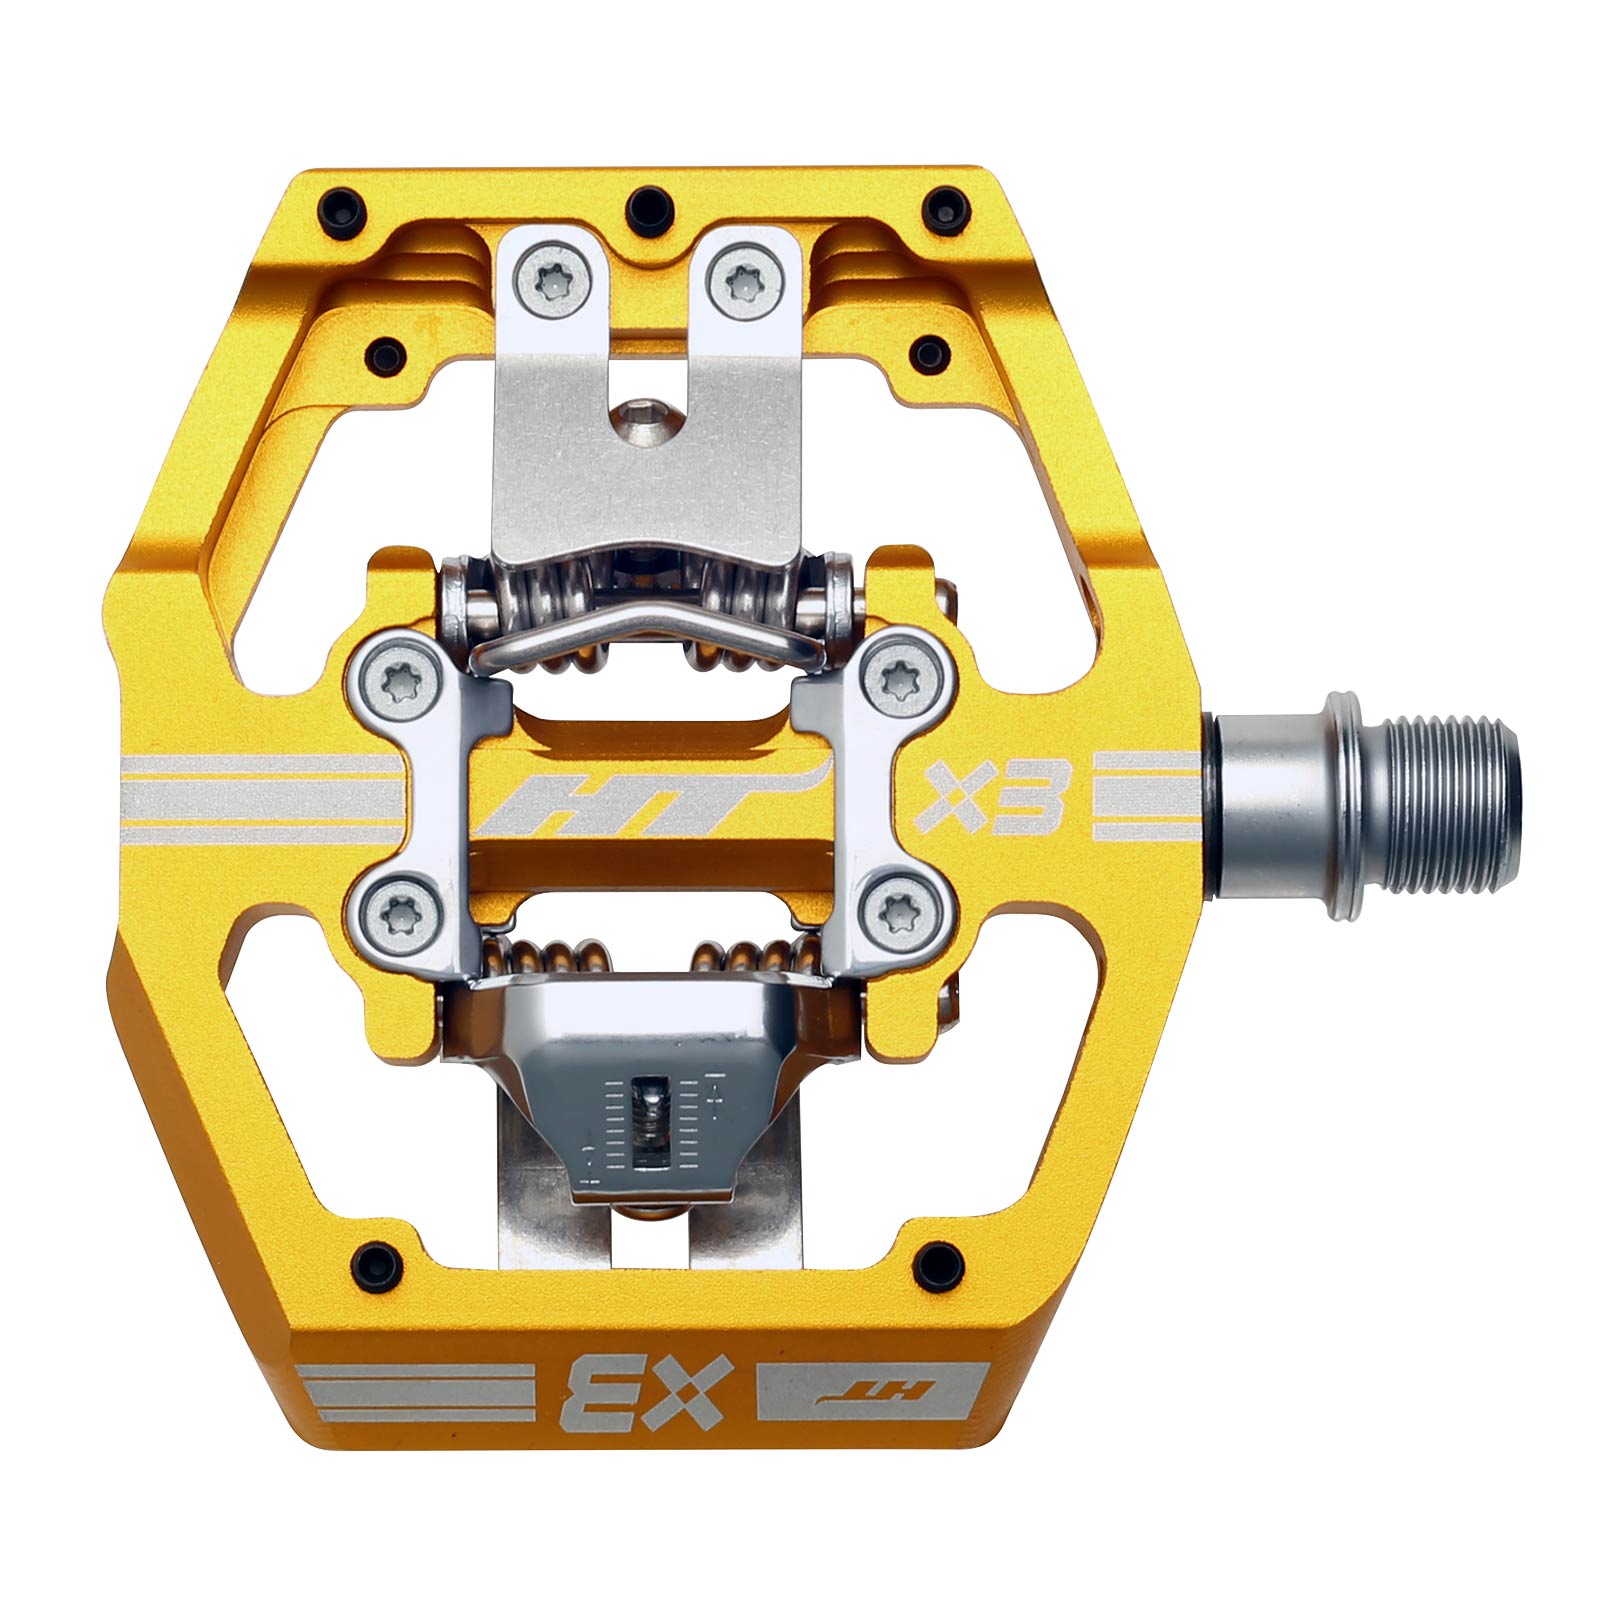 Ht X3 Pedals Alloy / CNC CRMO - Gold